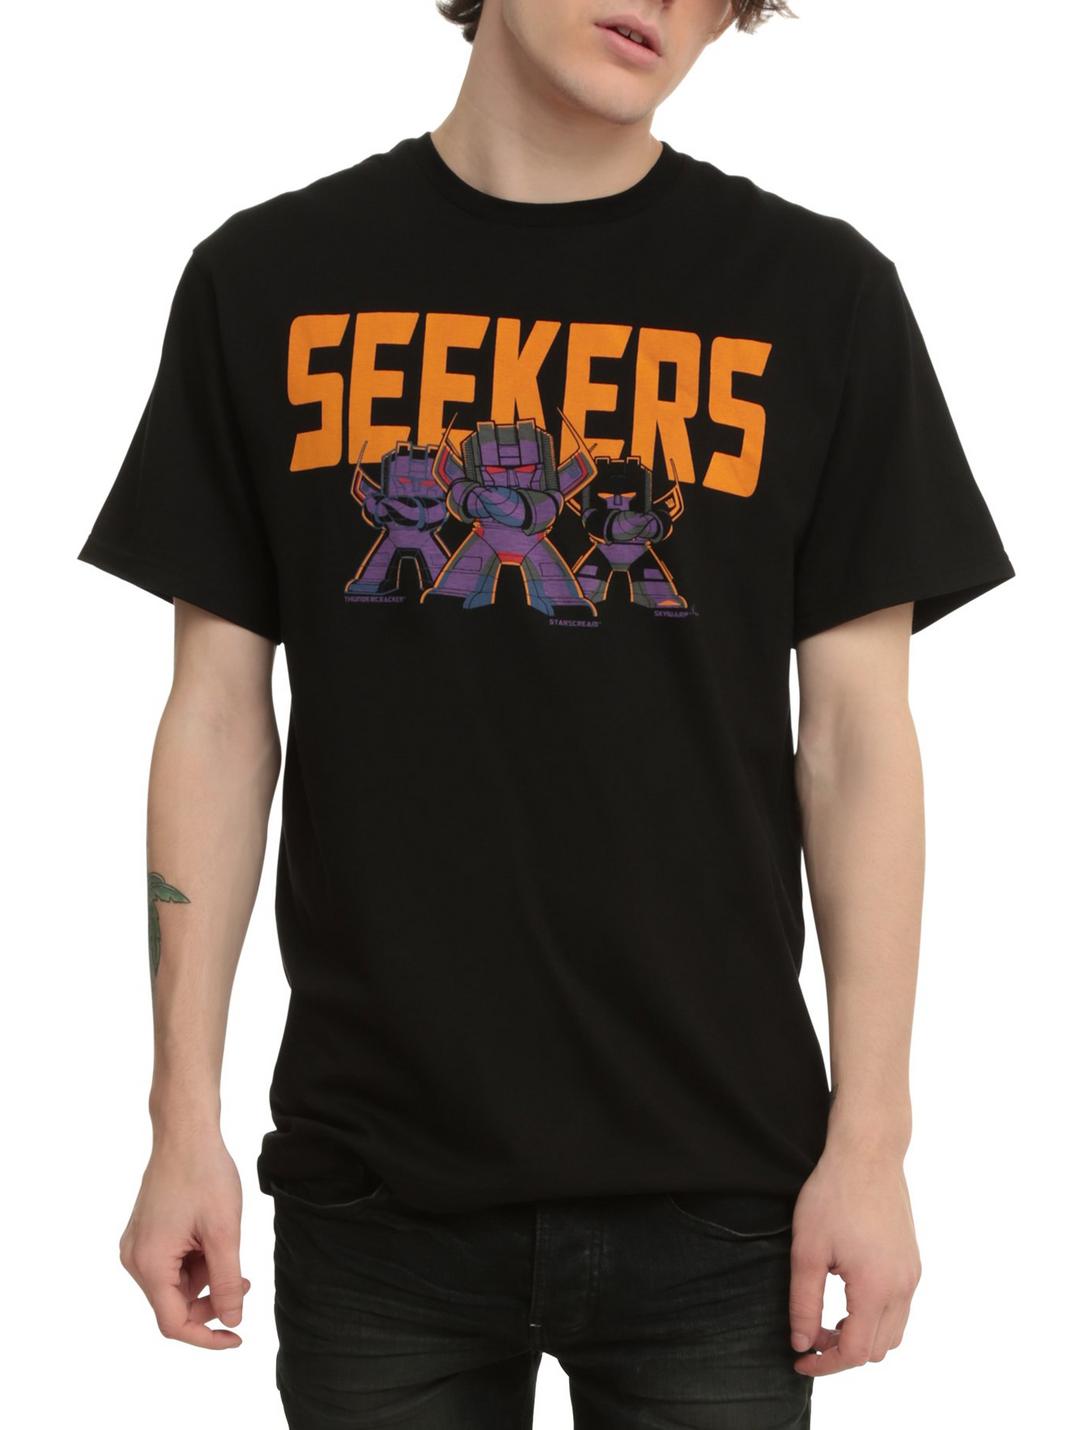 Transformers Seekers T-Shirt, BLACK, hi-res